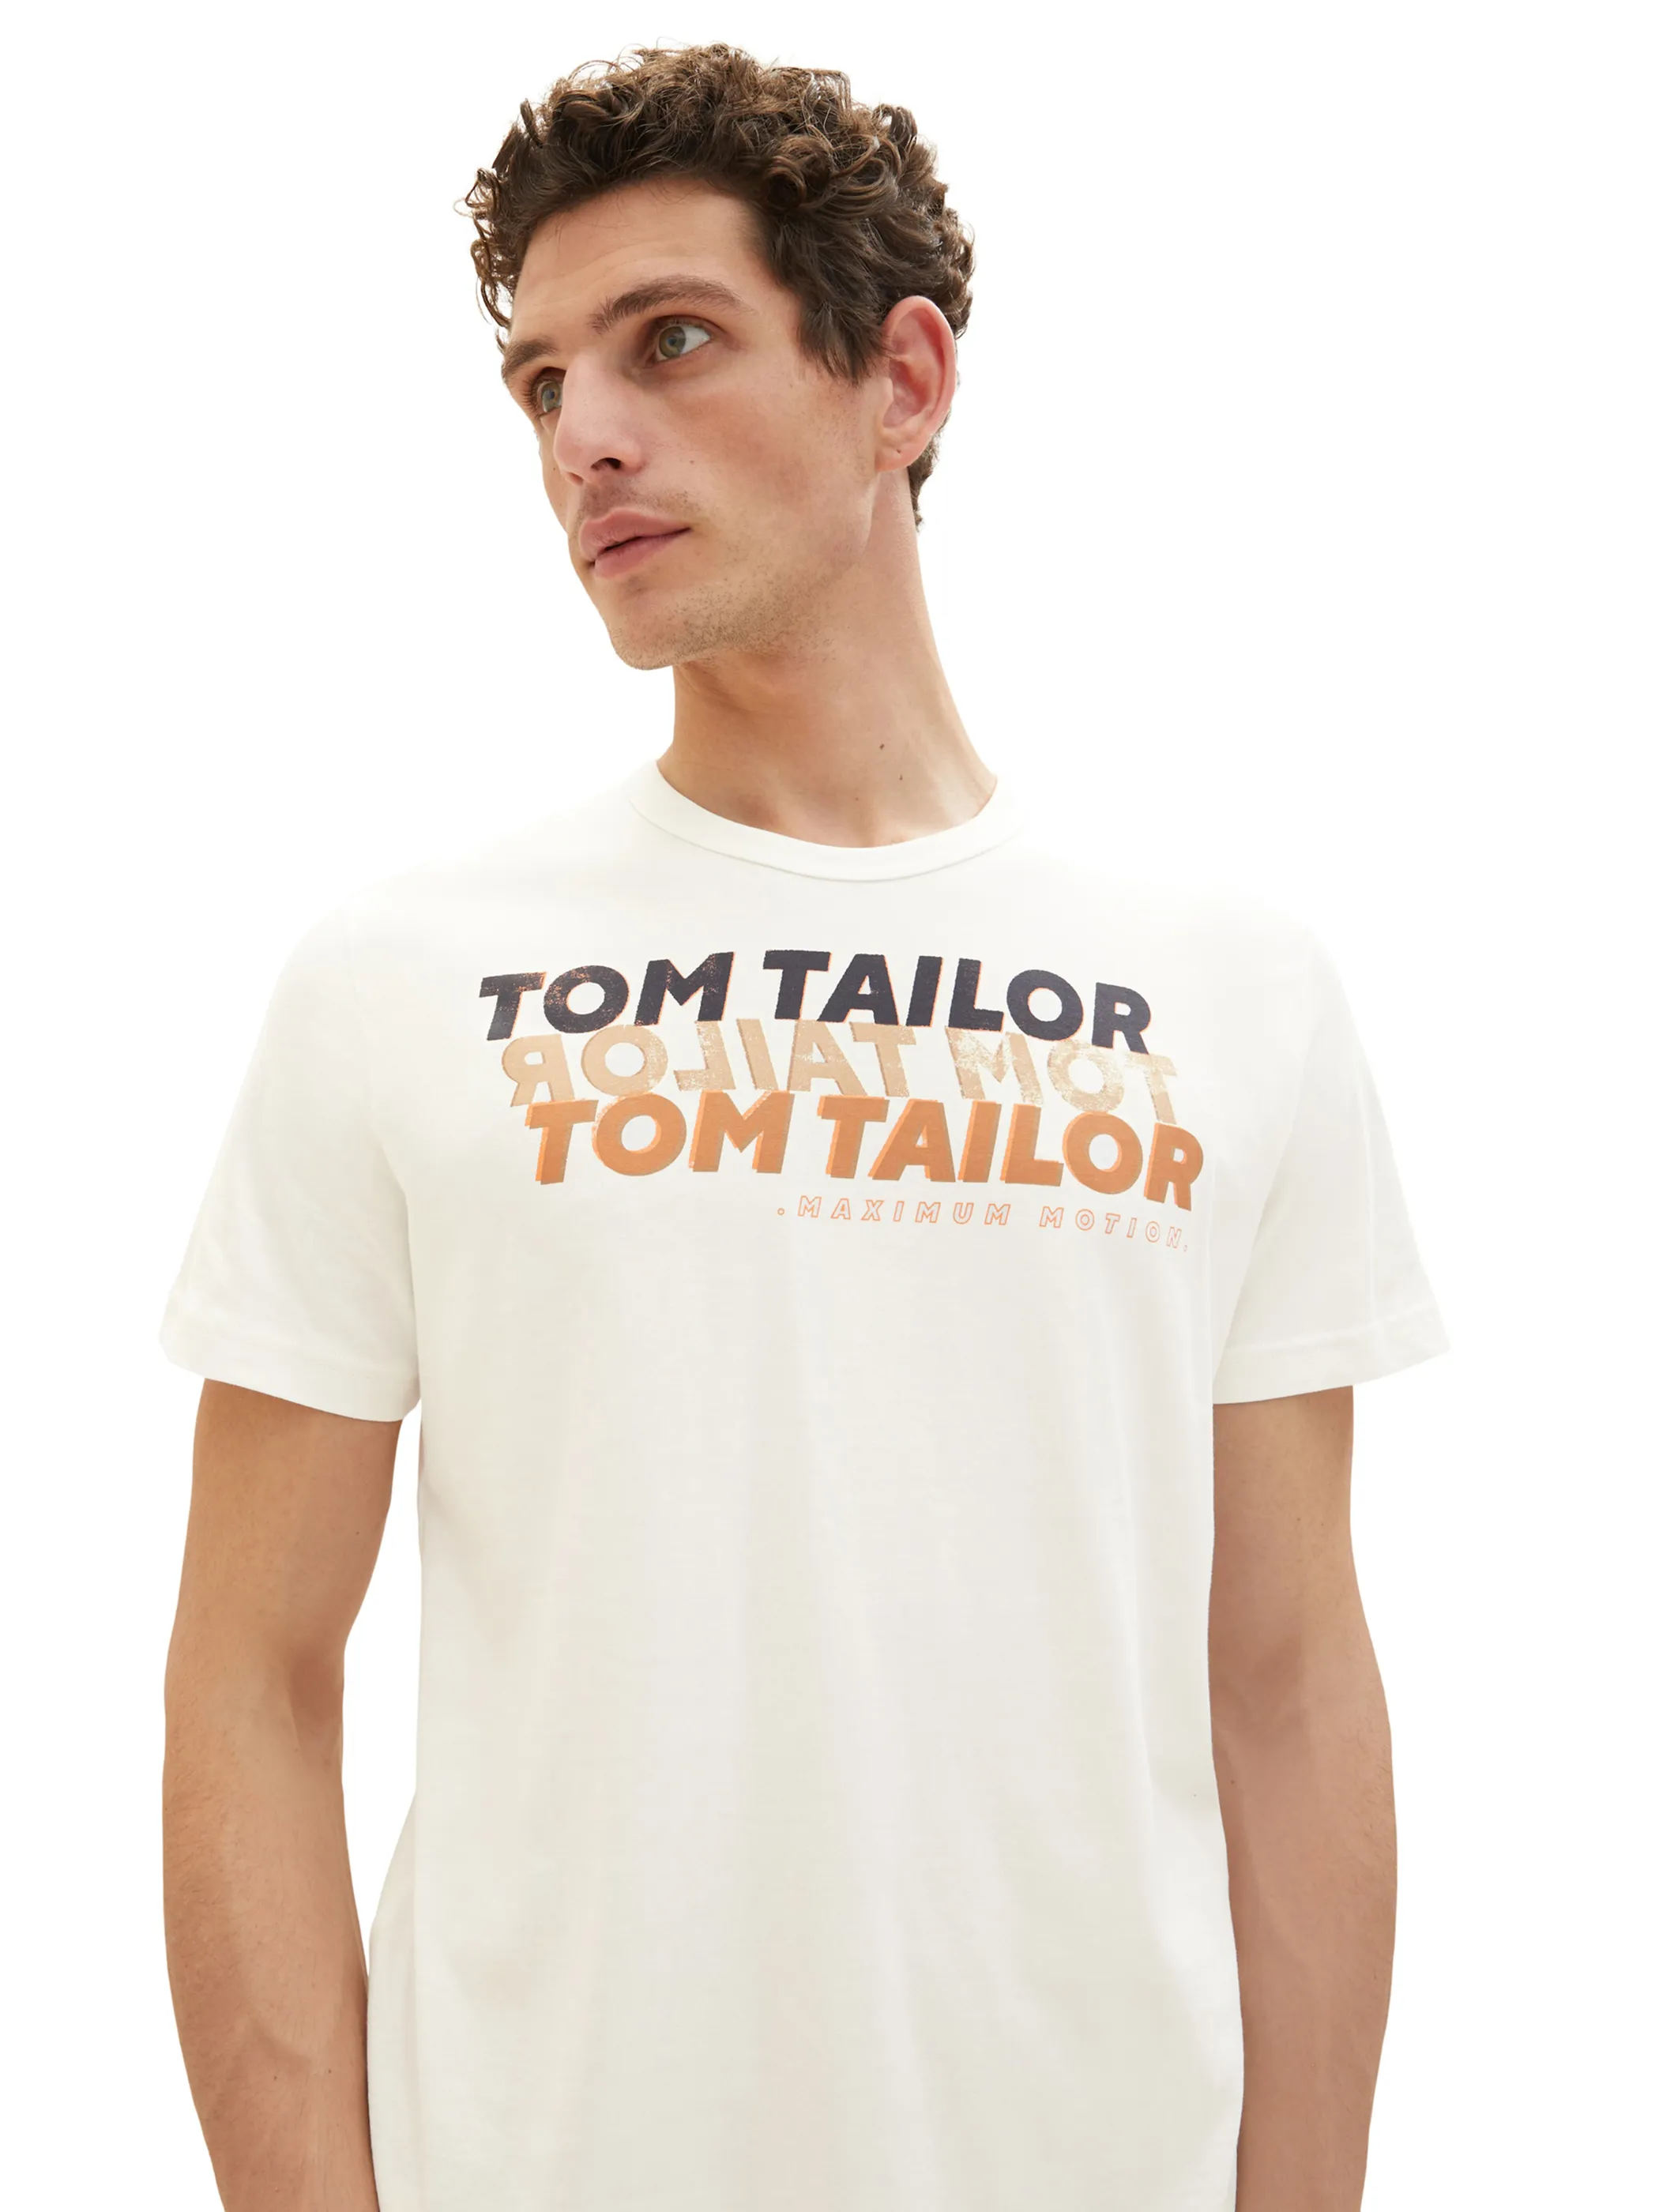 Tom Tailor 1036426 wording logo print t-shirt Weiß 880537 10332 4